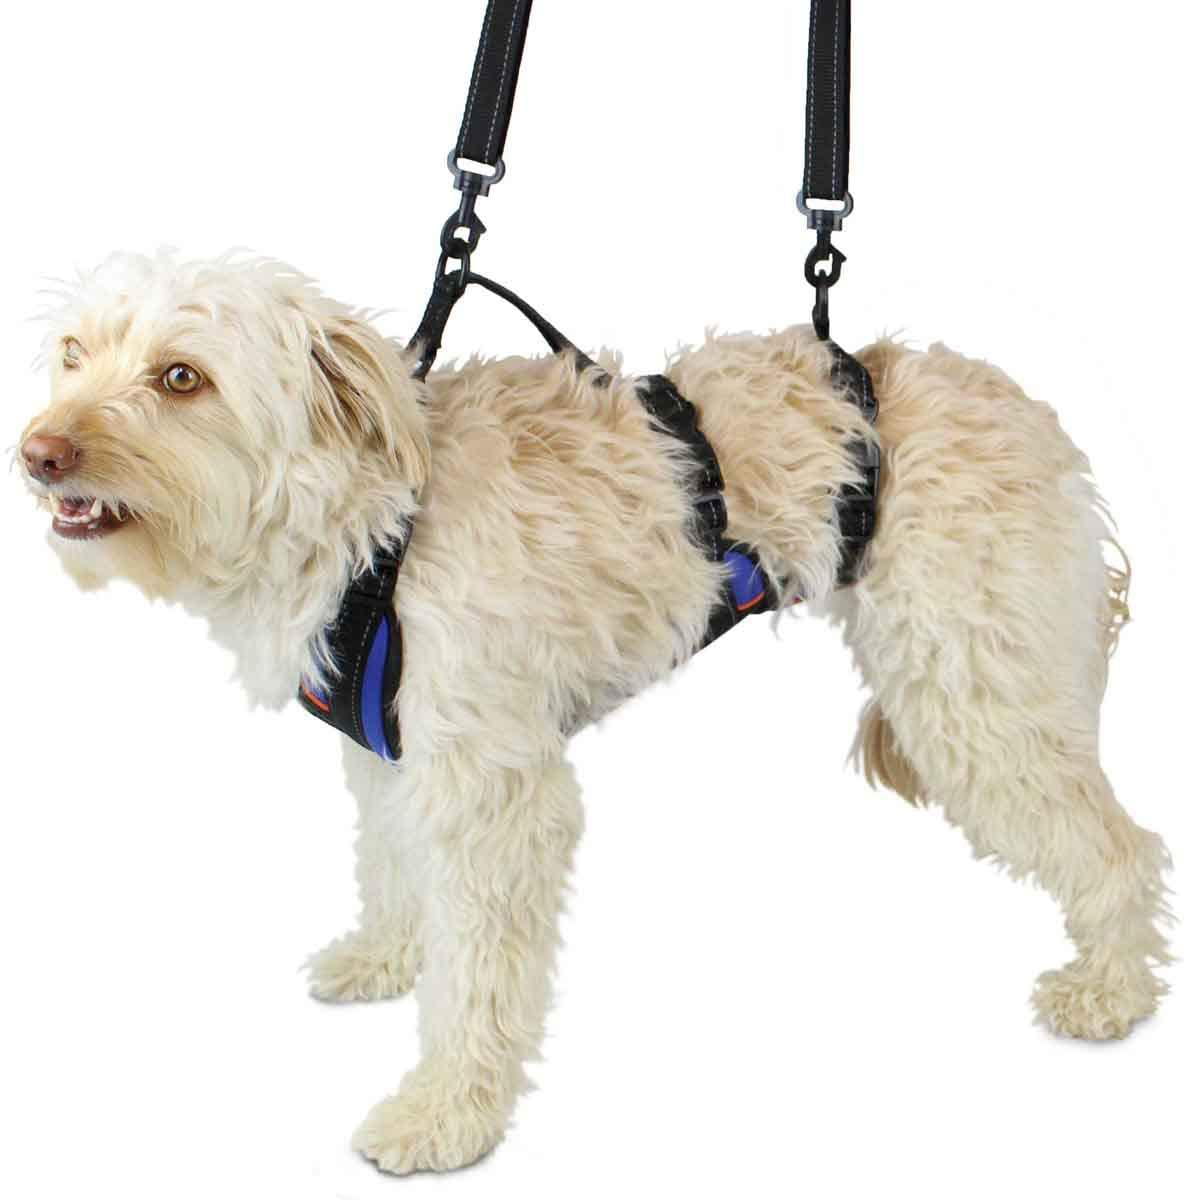 Walkin' LiftnStep Dog Harness for Full Body Support